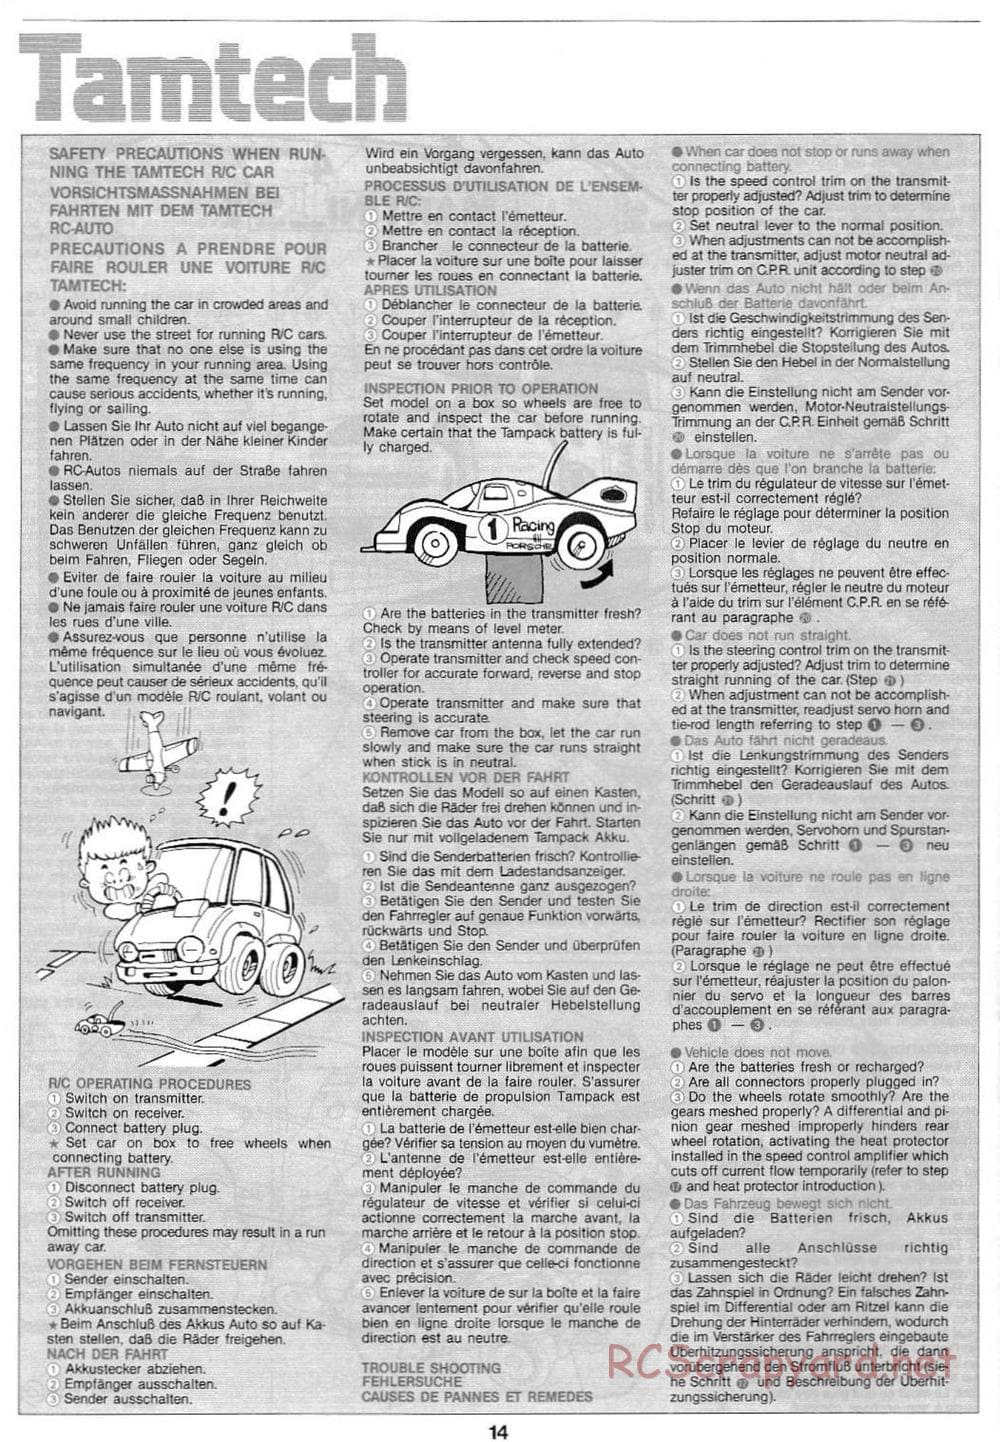 Tamiya - Tamtech - Lancia LC2 Chassis - Manual - Page 14